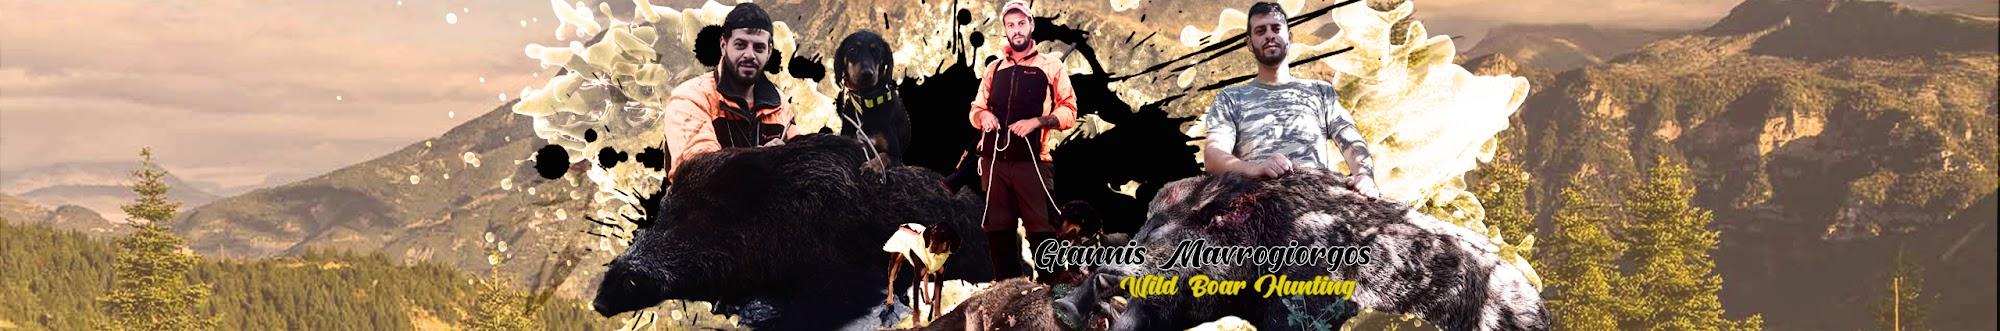 Giannis Mavrogiorgos - Wild Boar Hunting